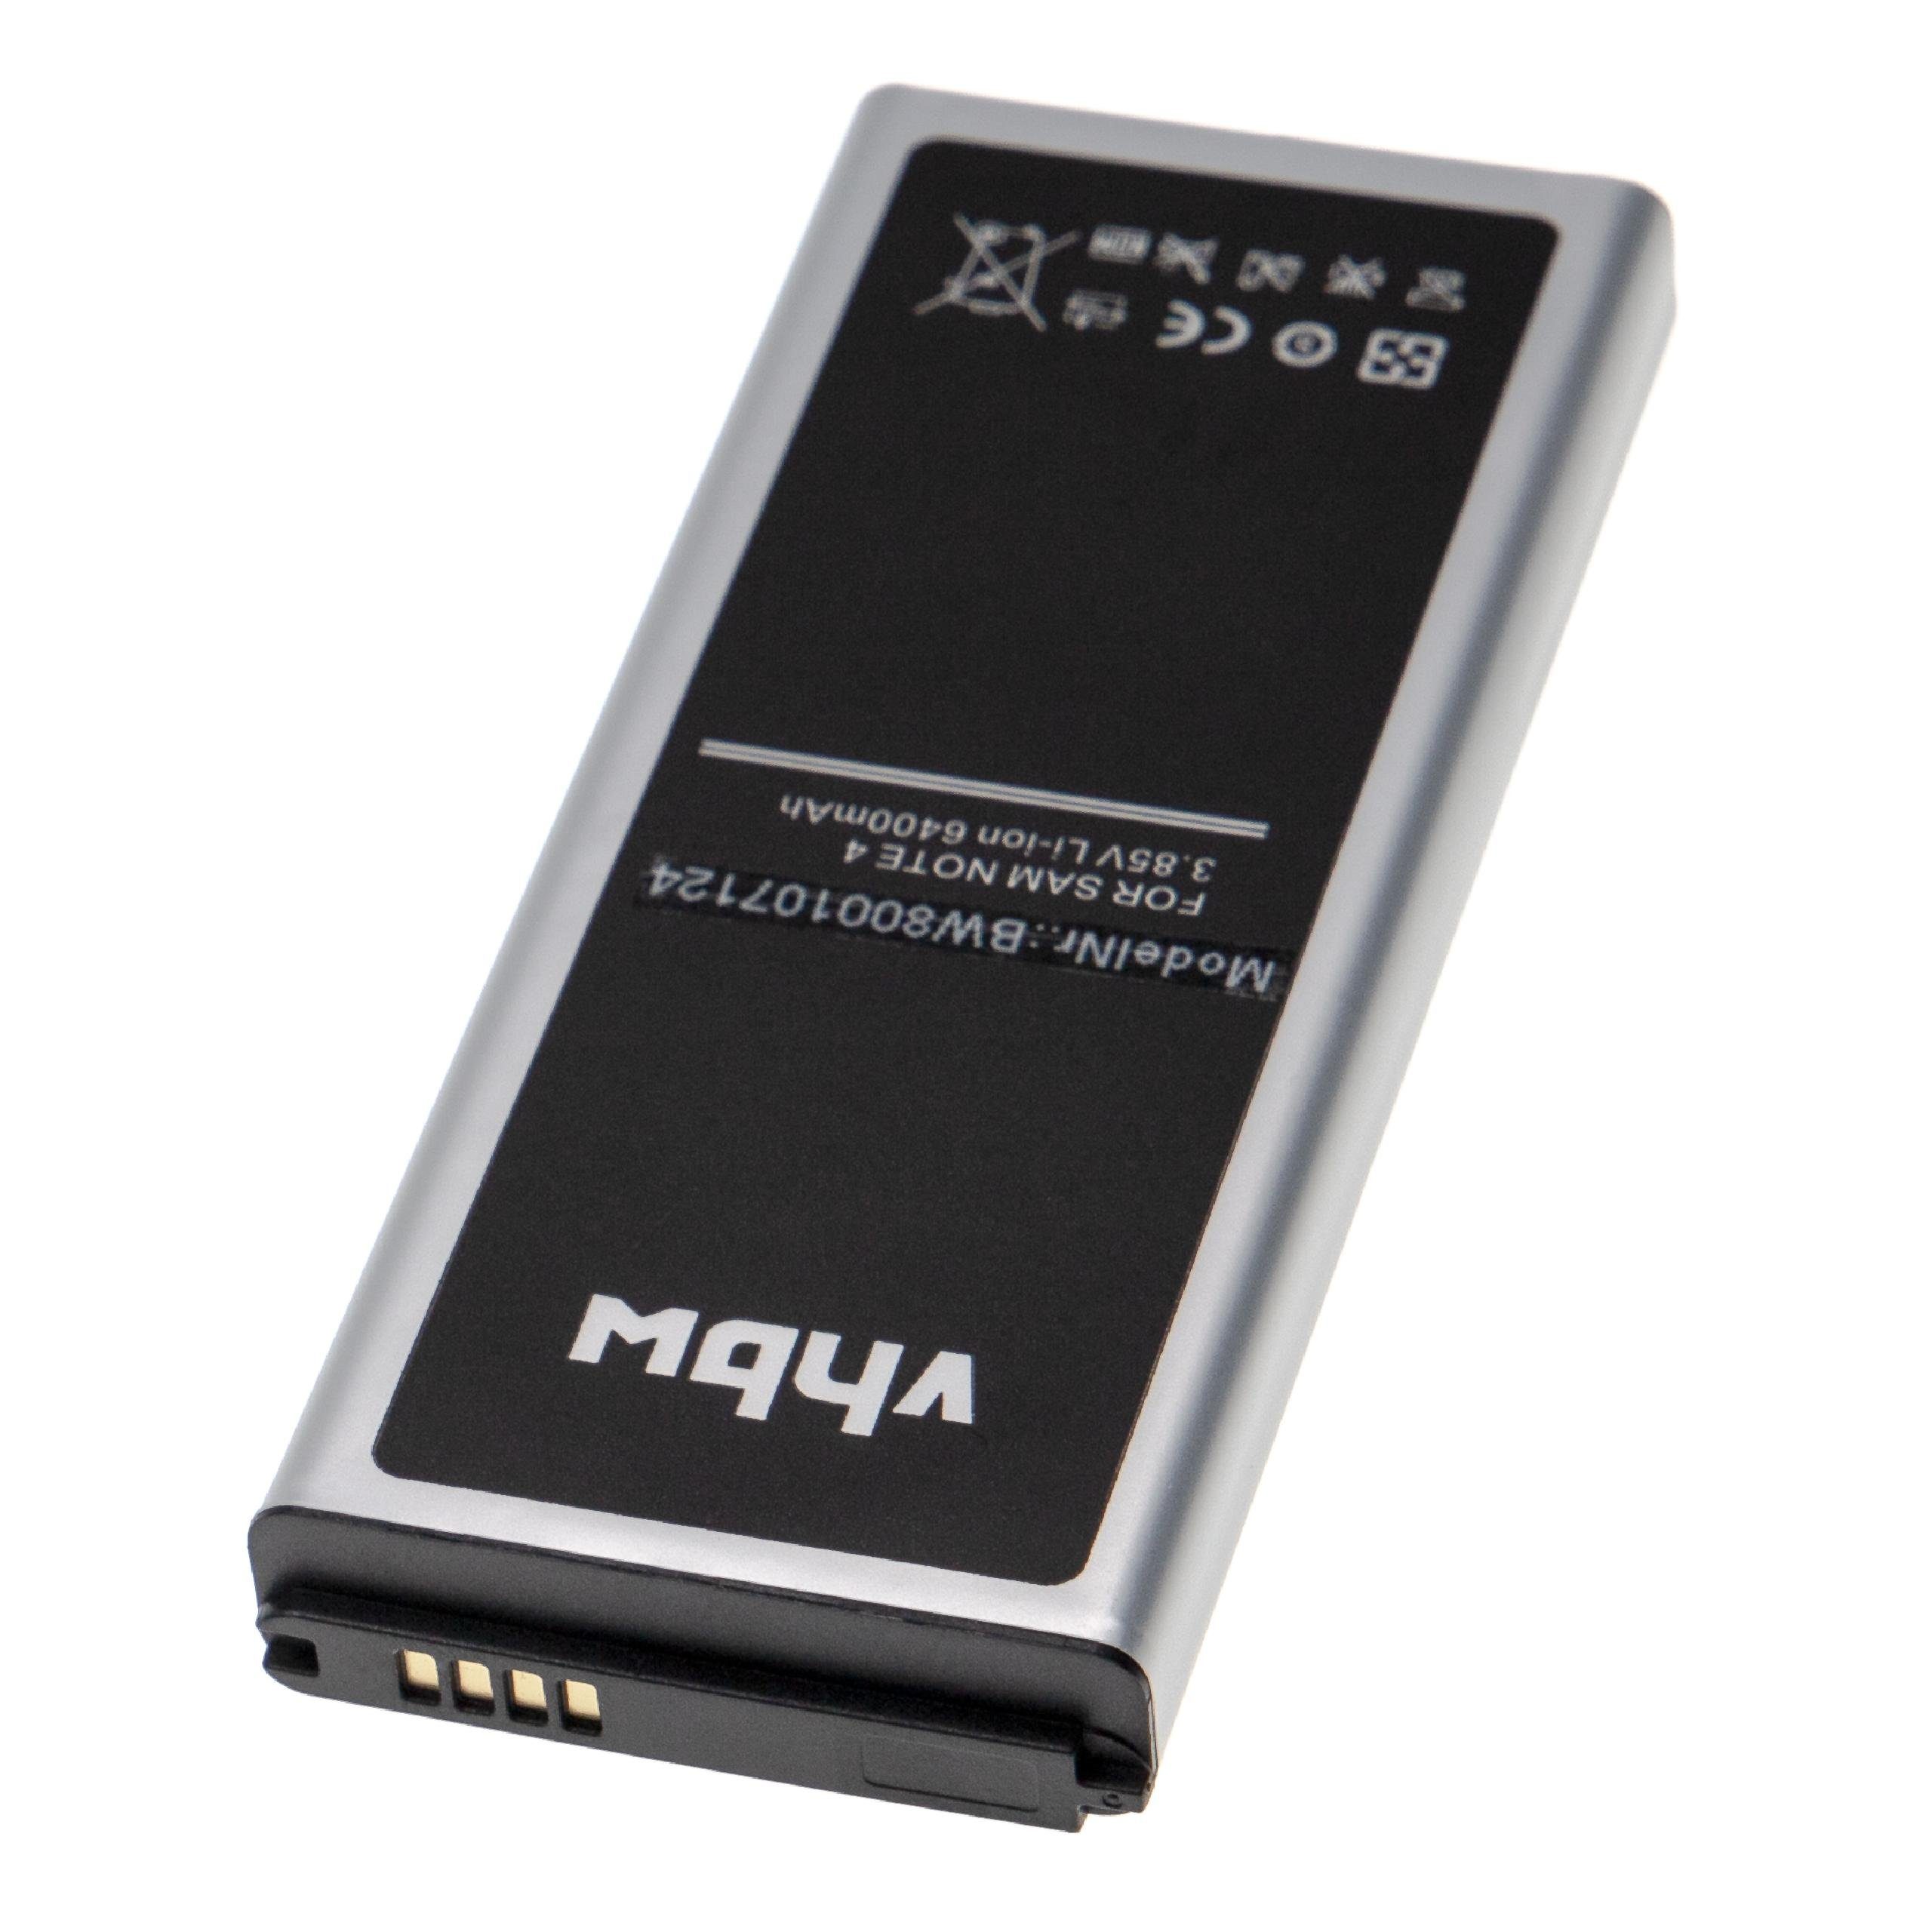 vhbw kompatibel mAh 6400 4, SM-N910C, SM-N910A V) mit (3,85 Galaxy Smartphone-Akku Note Samsung Li-Ion